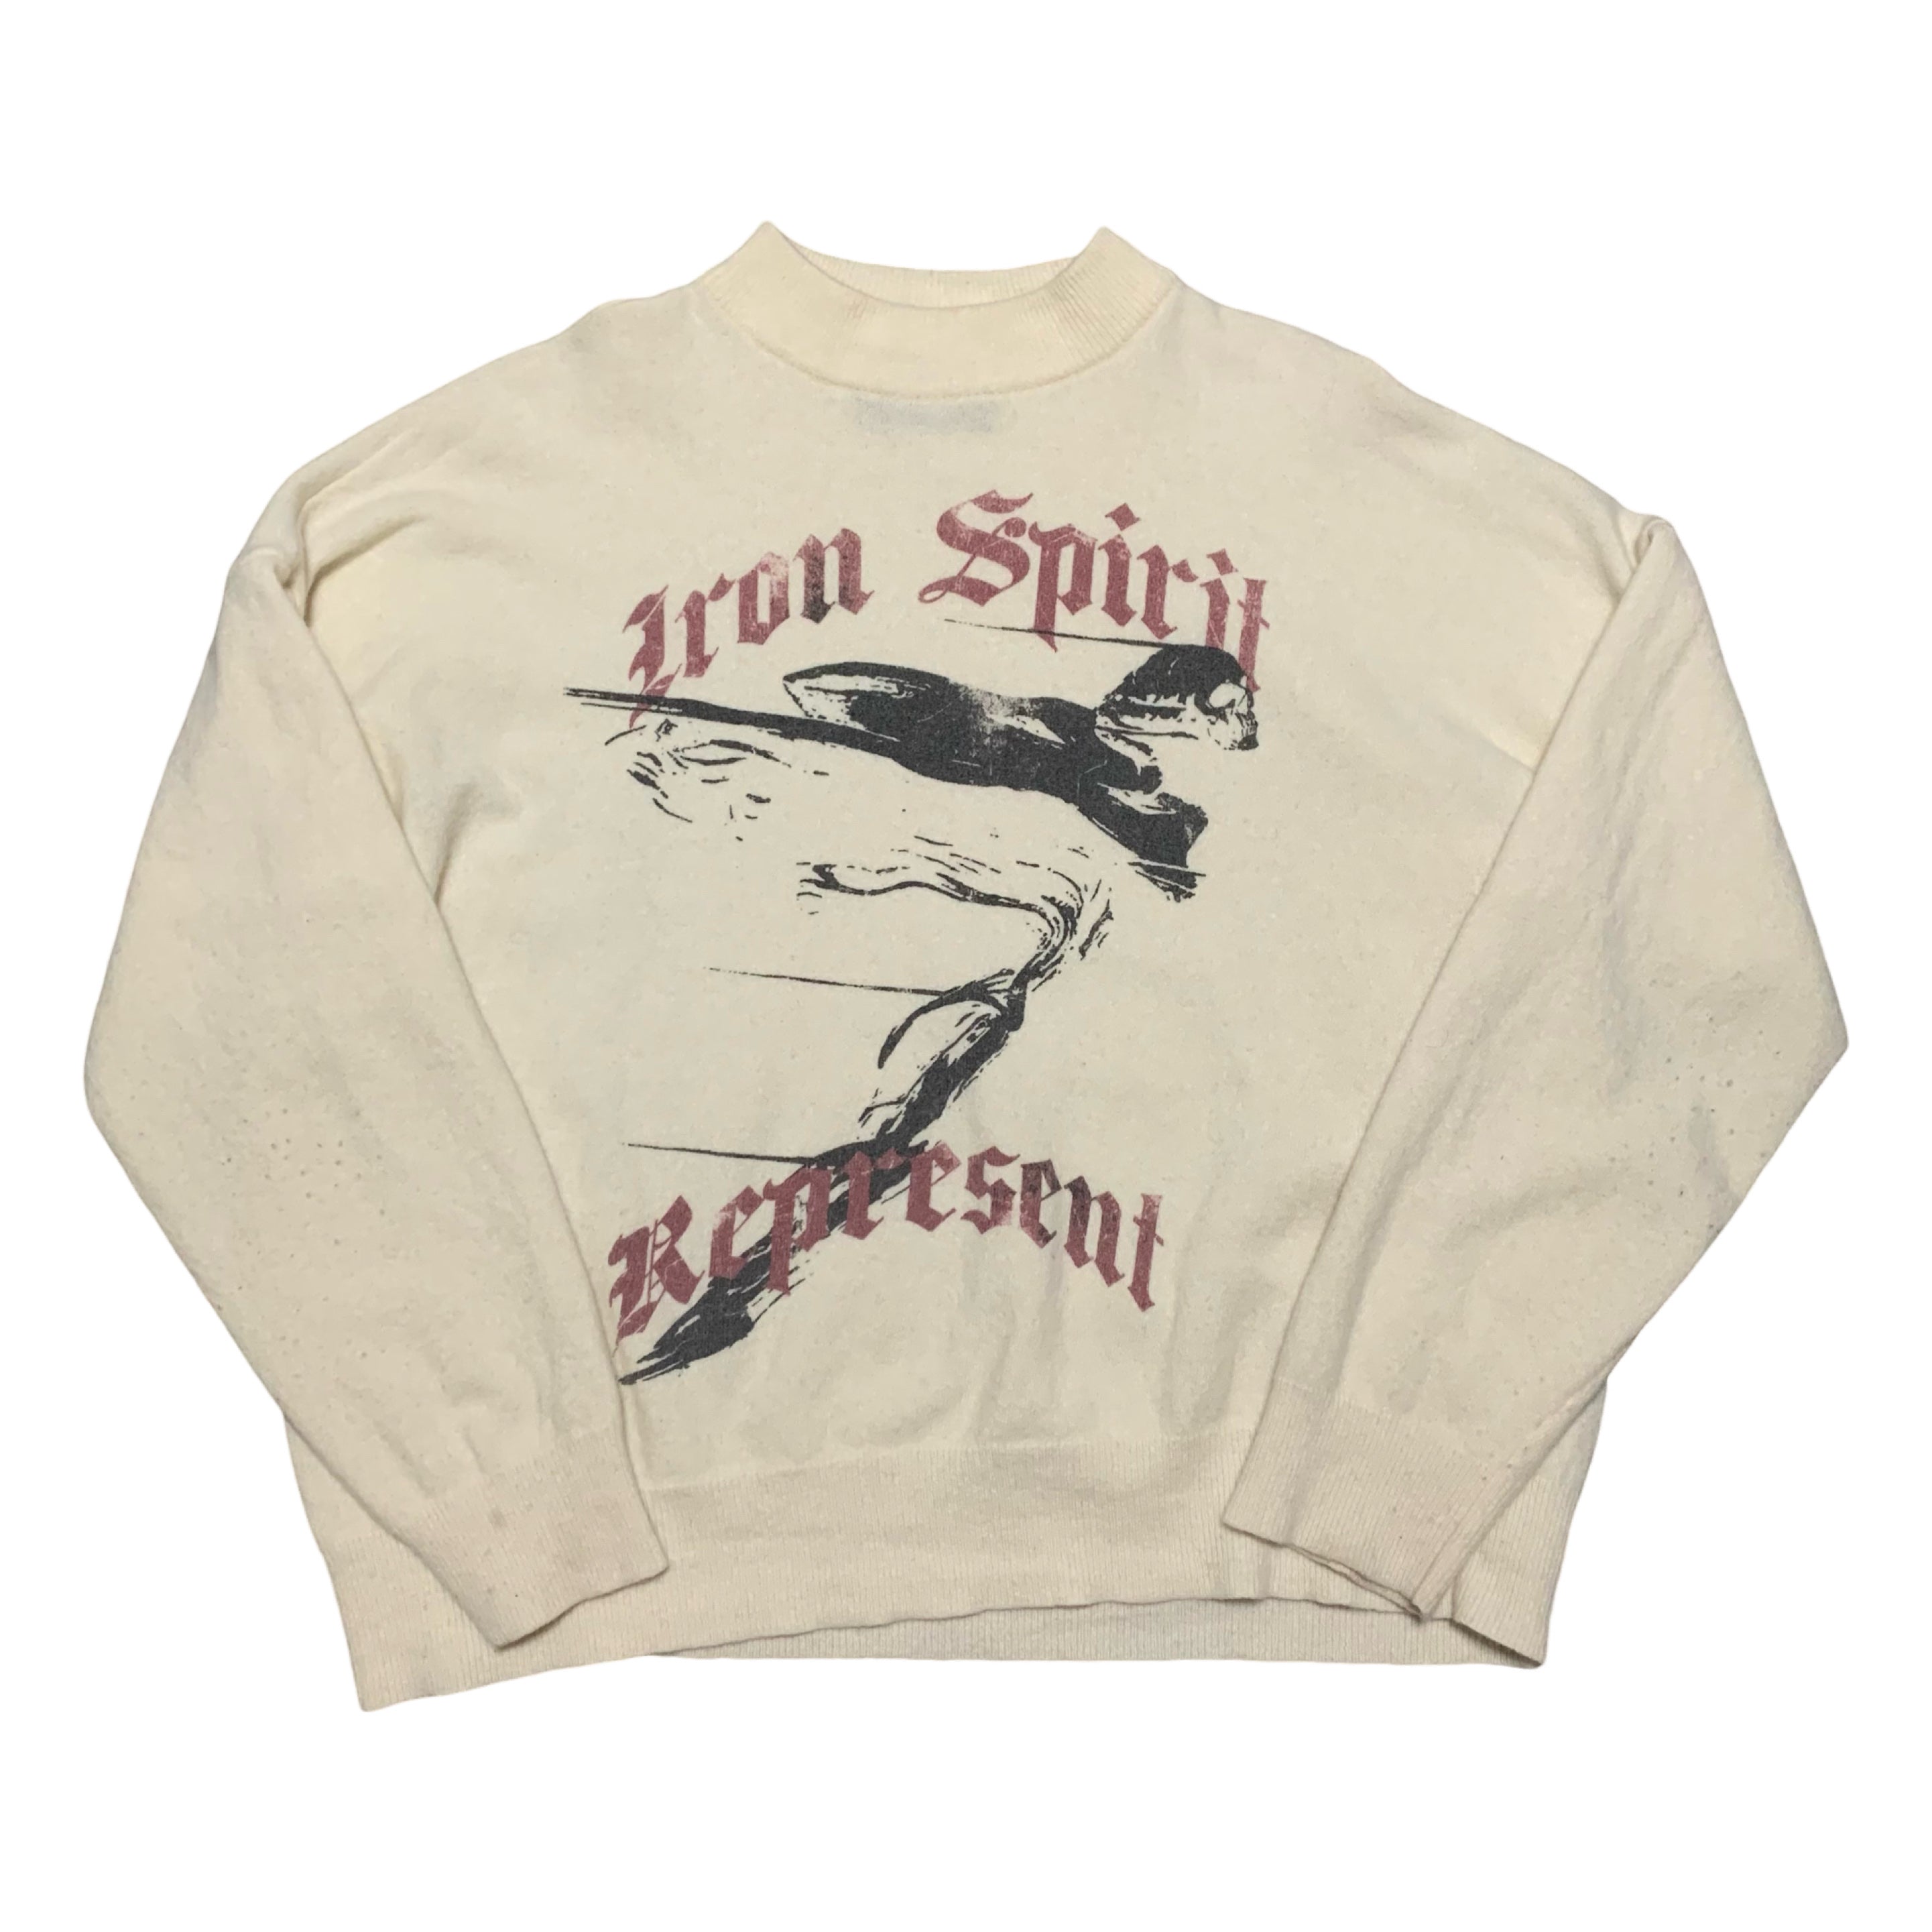 Represent Small Wool Iron Spirit Vintage White Sweater